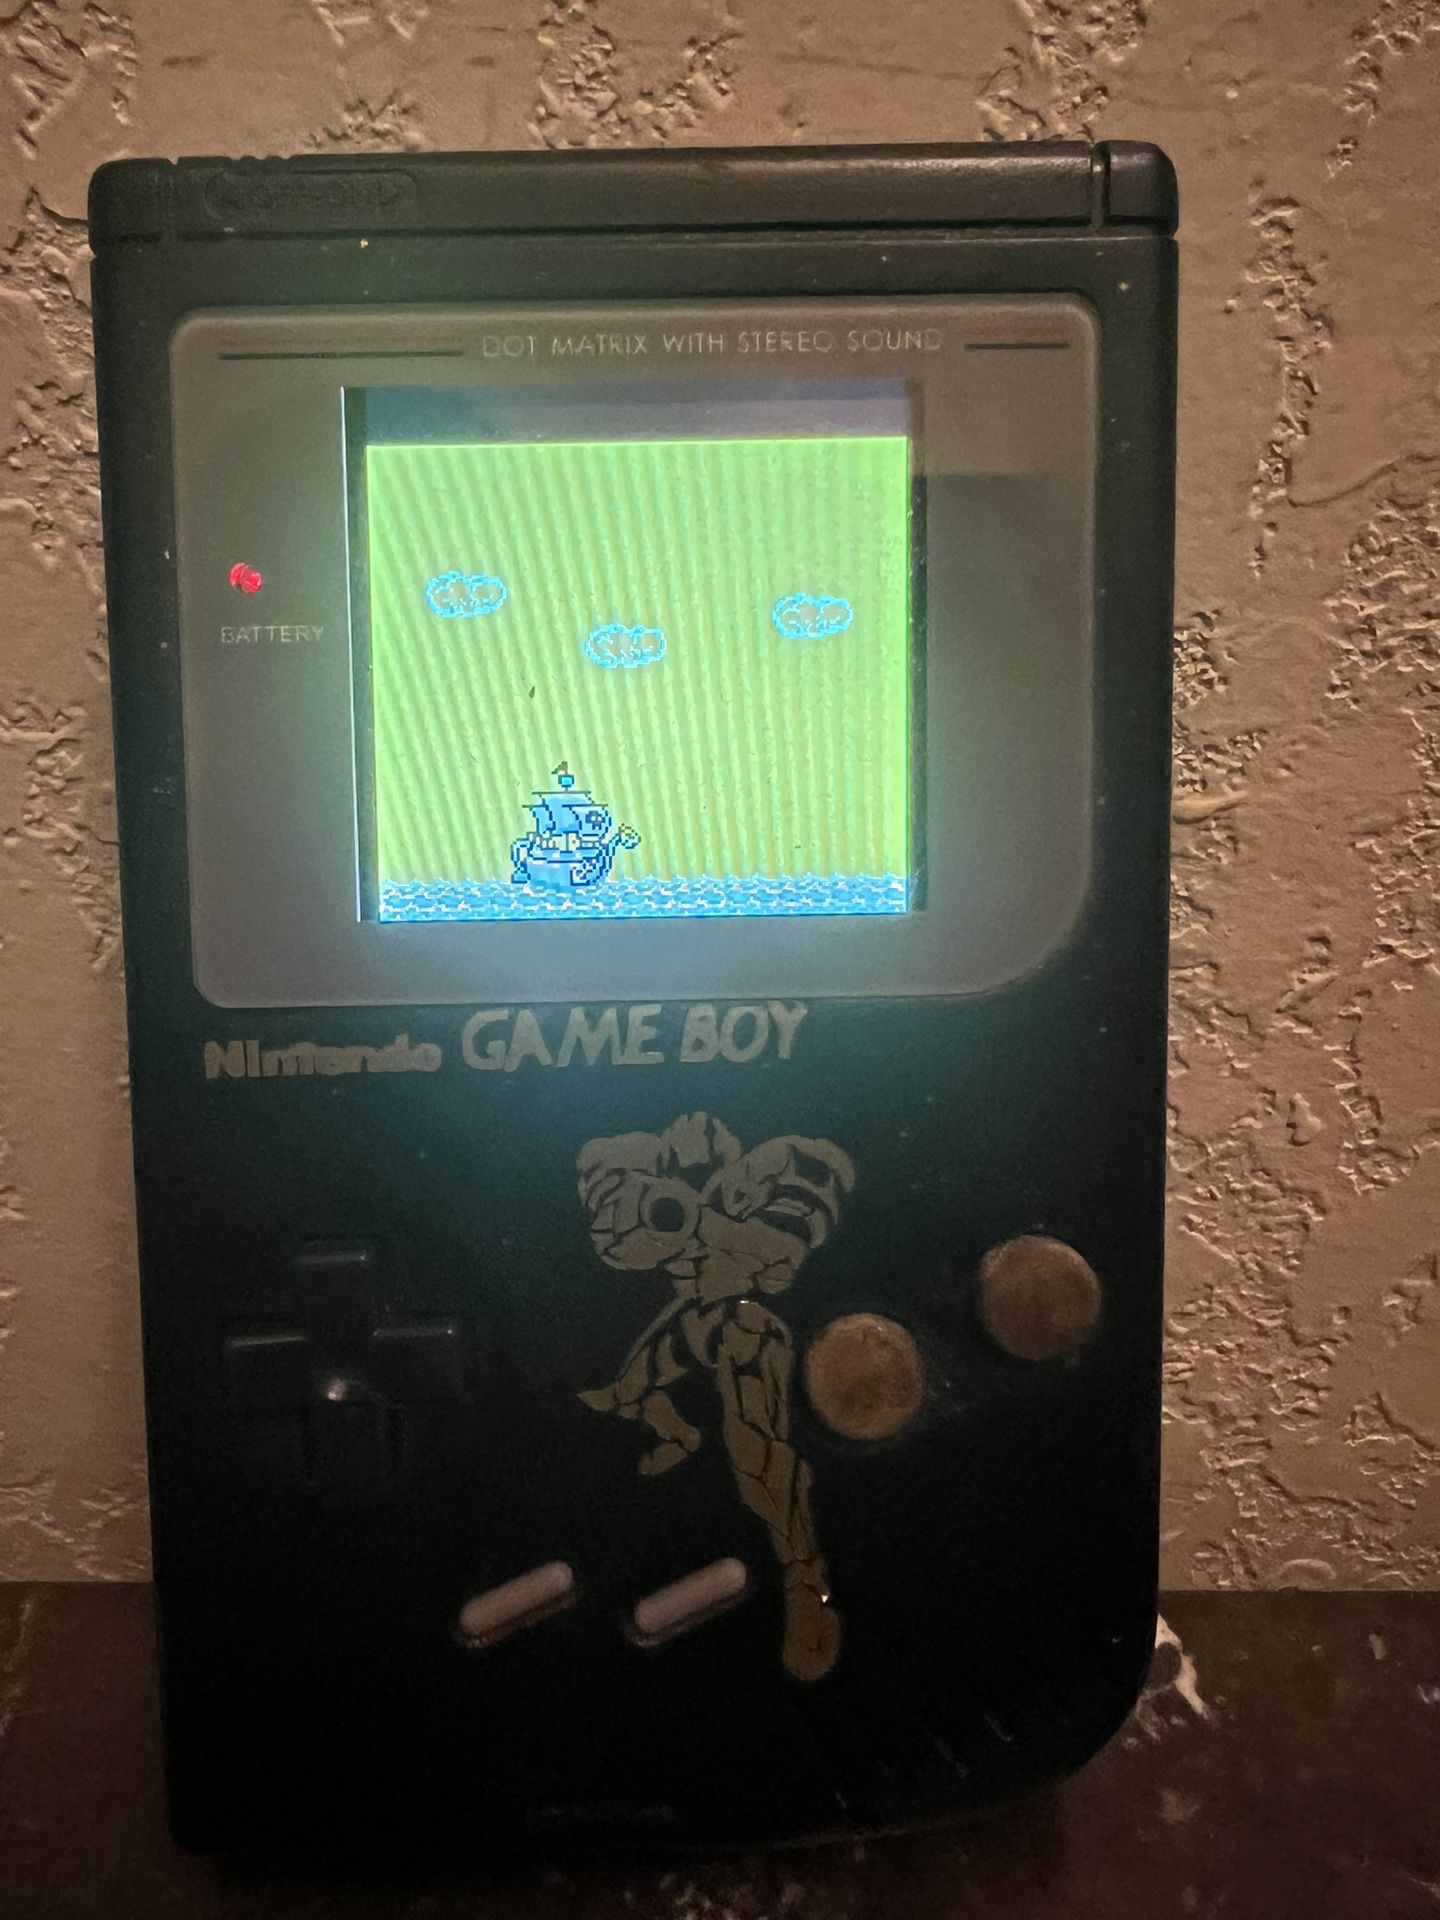 Modded Game Boy